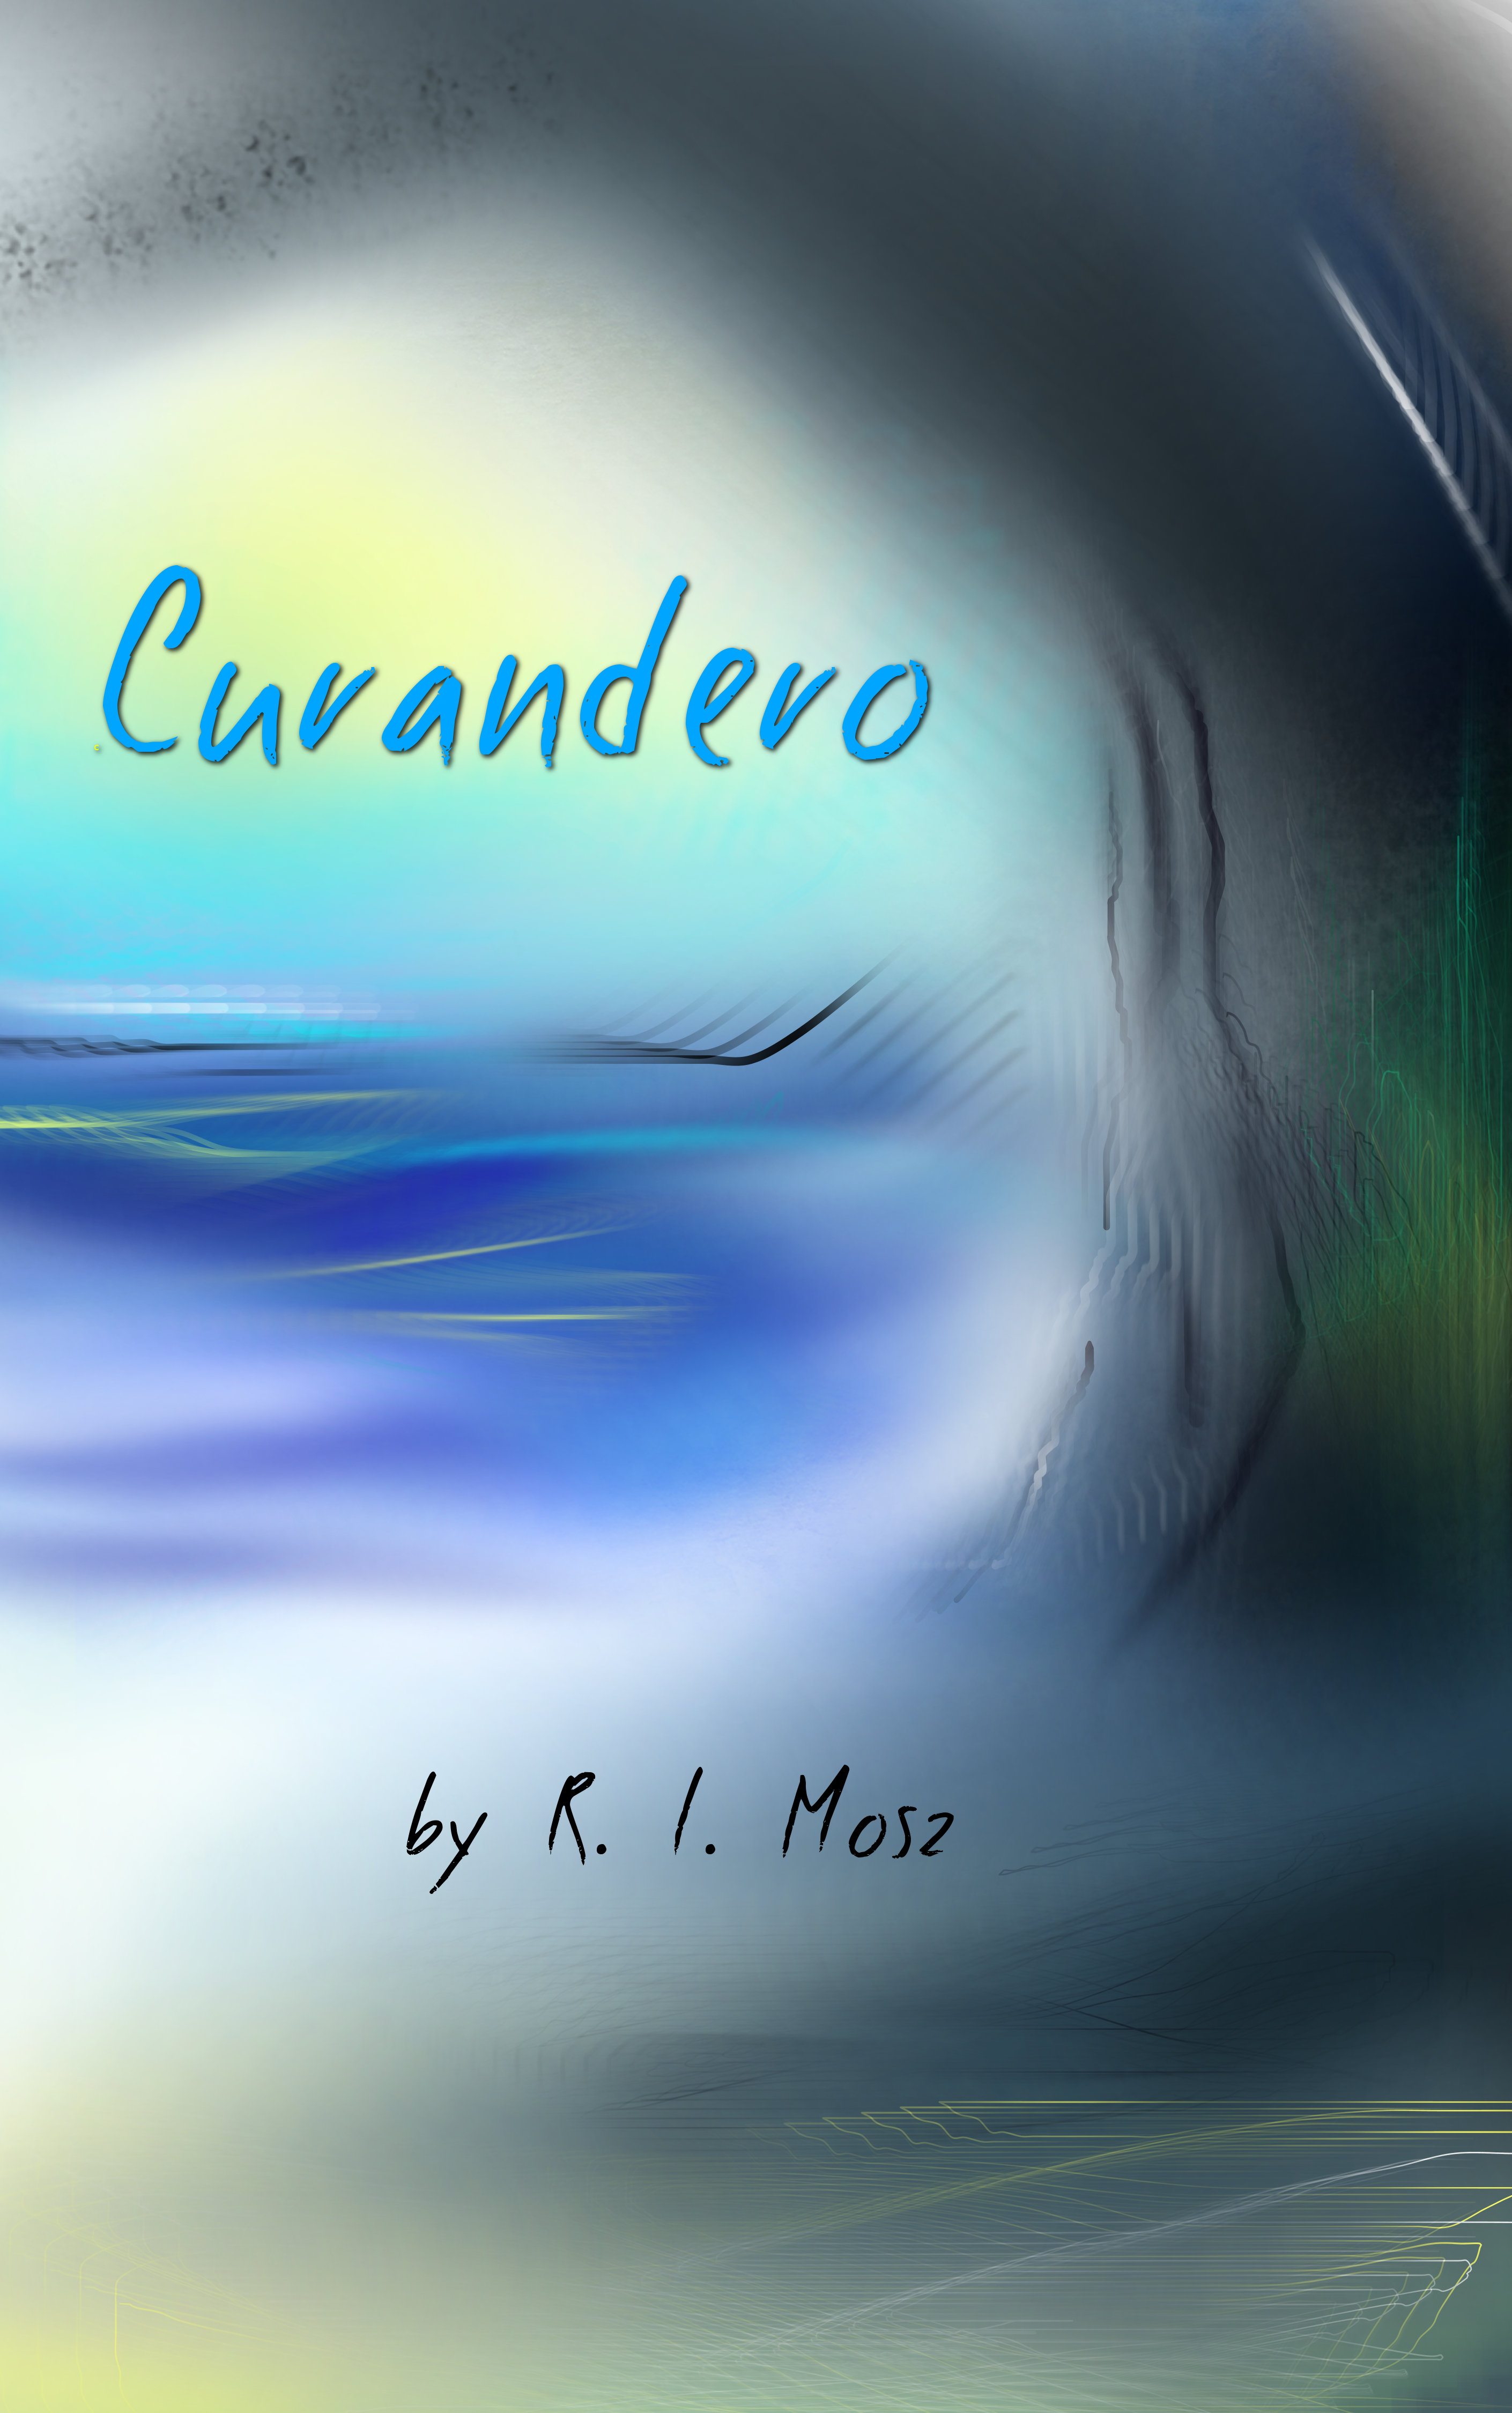 FREE: Curandero by R. L. Mosz